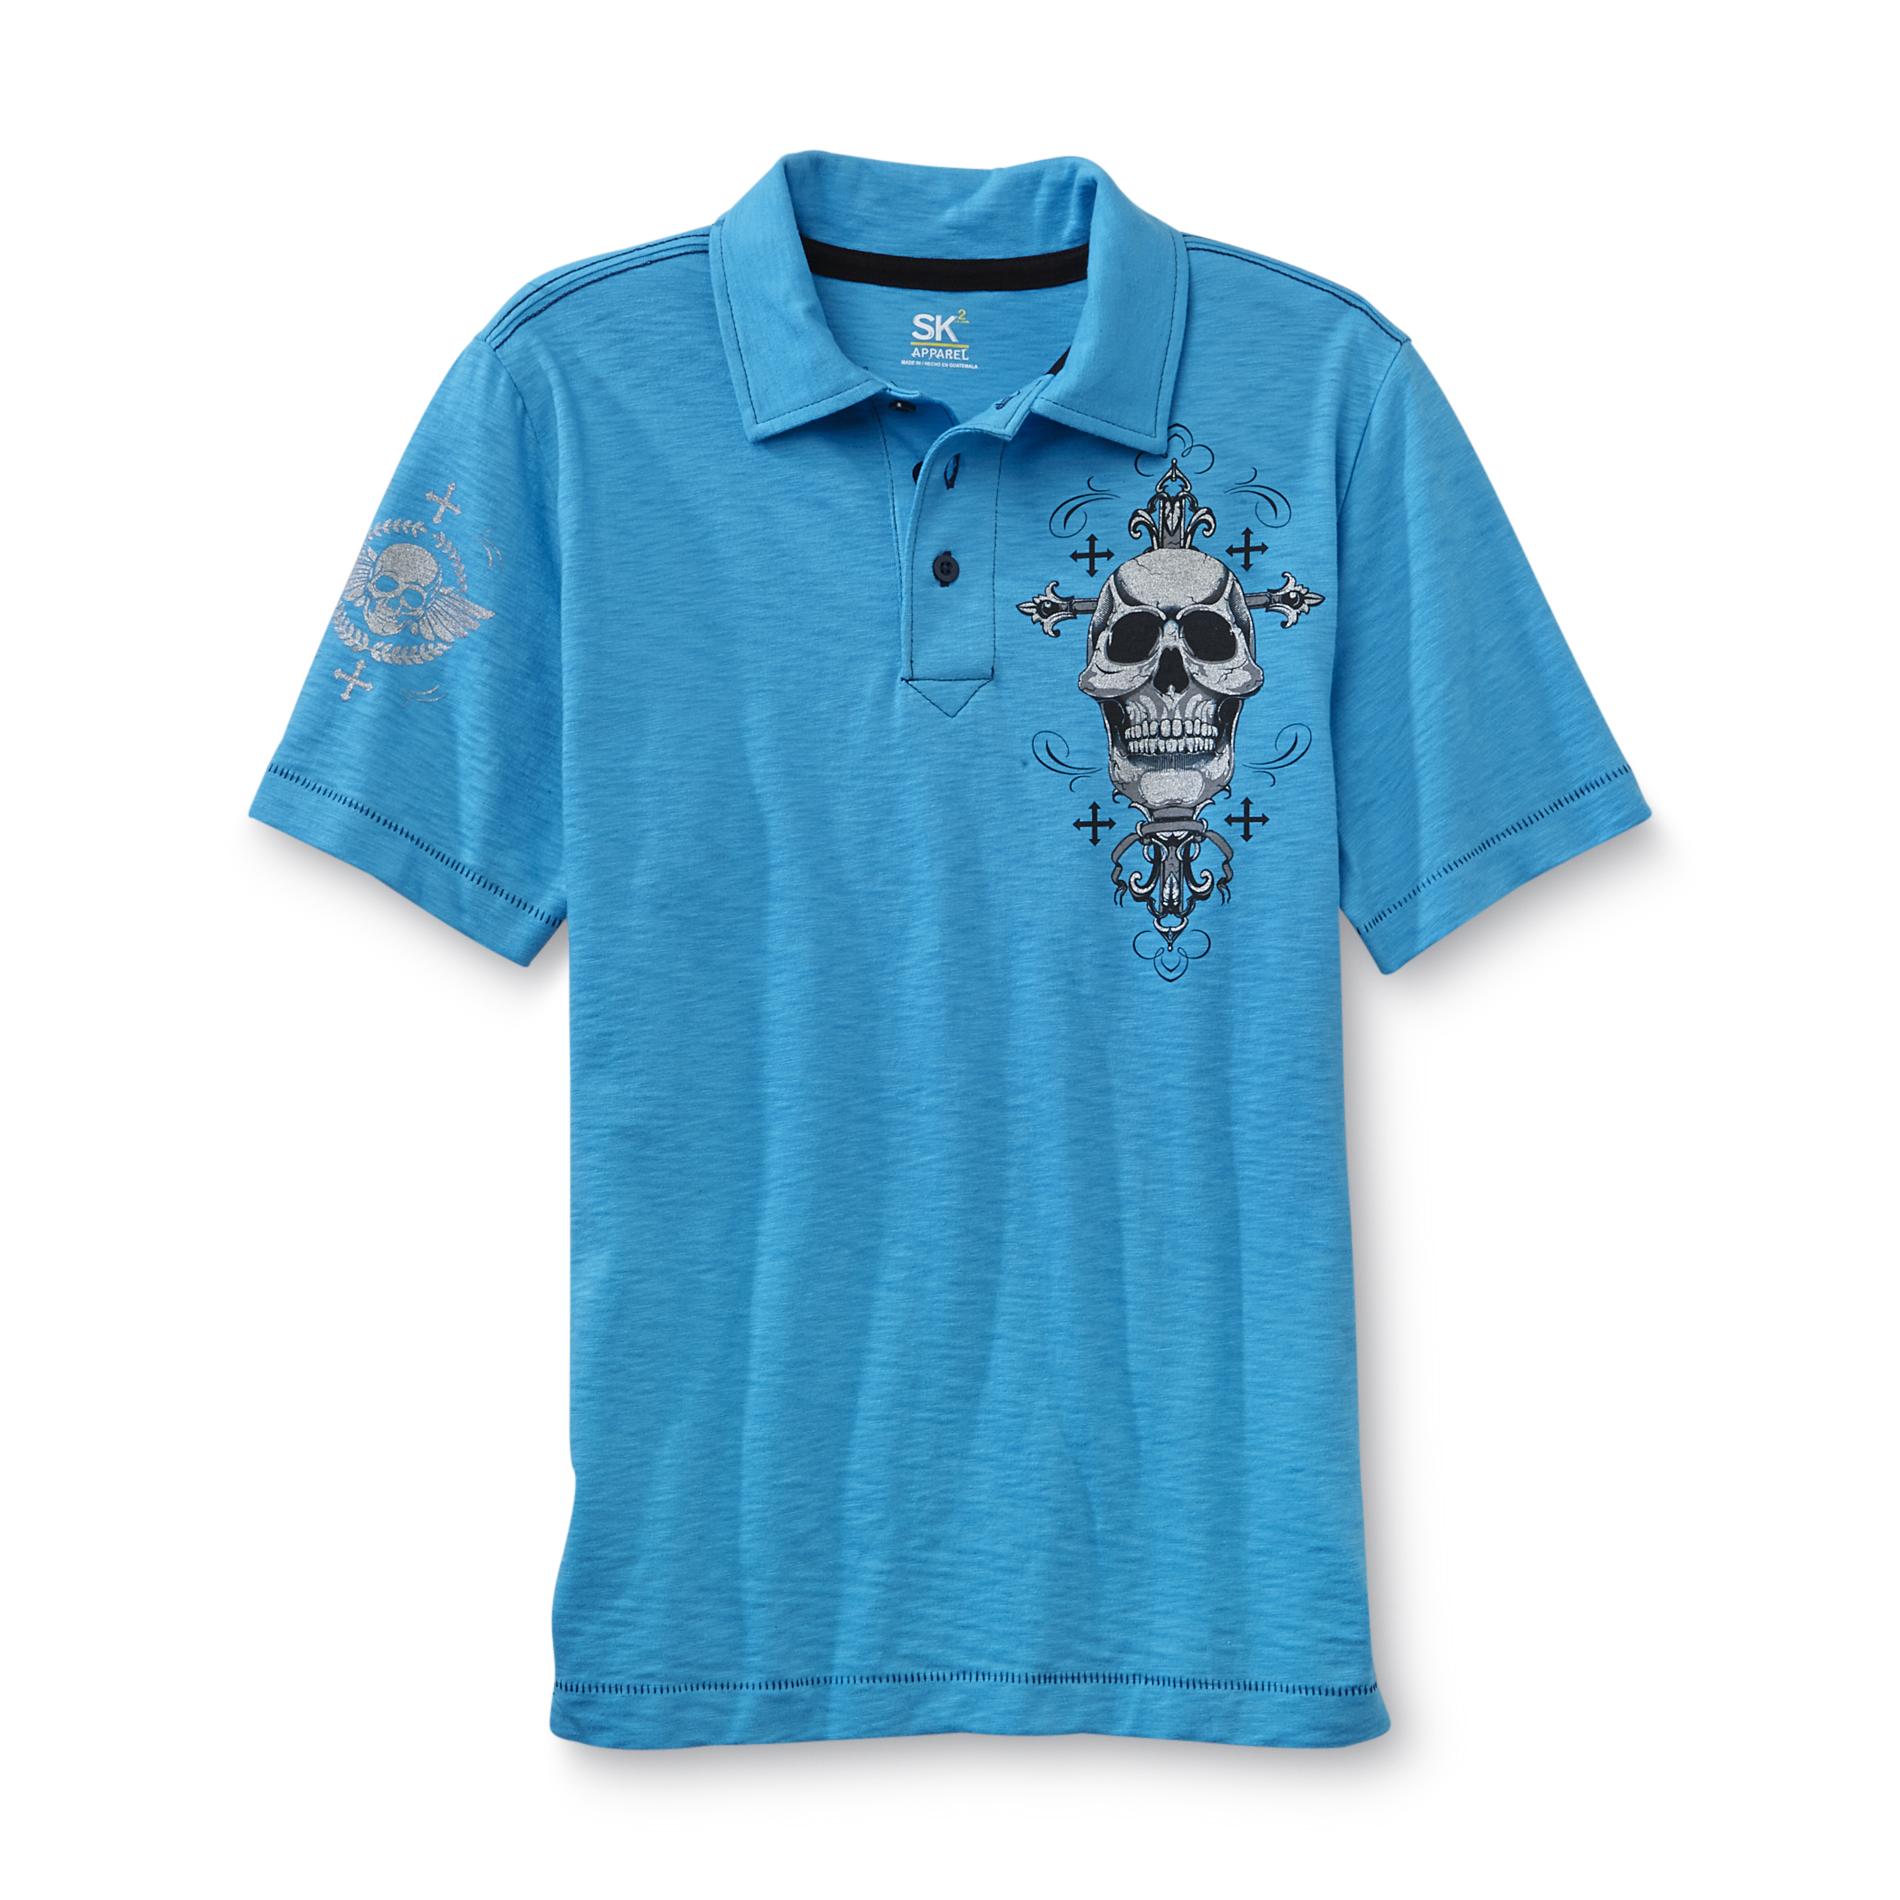 SK2 Boy's Polo Shirt - Metallic Skull Print